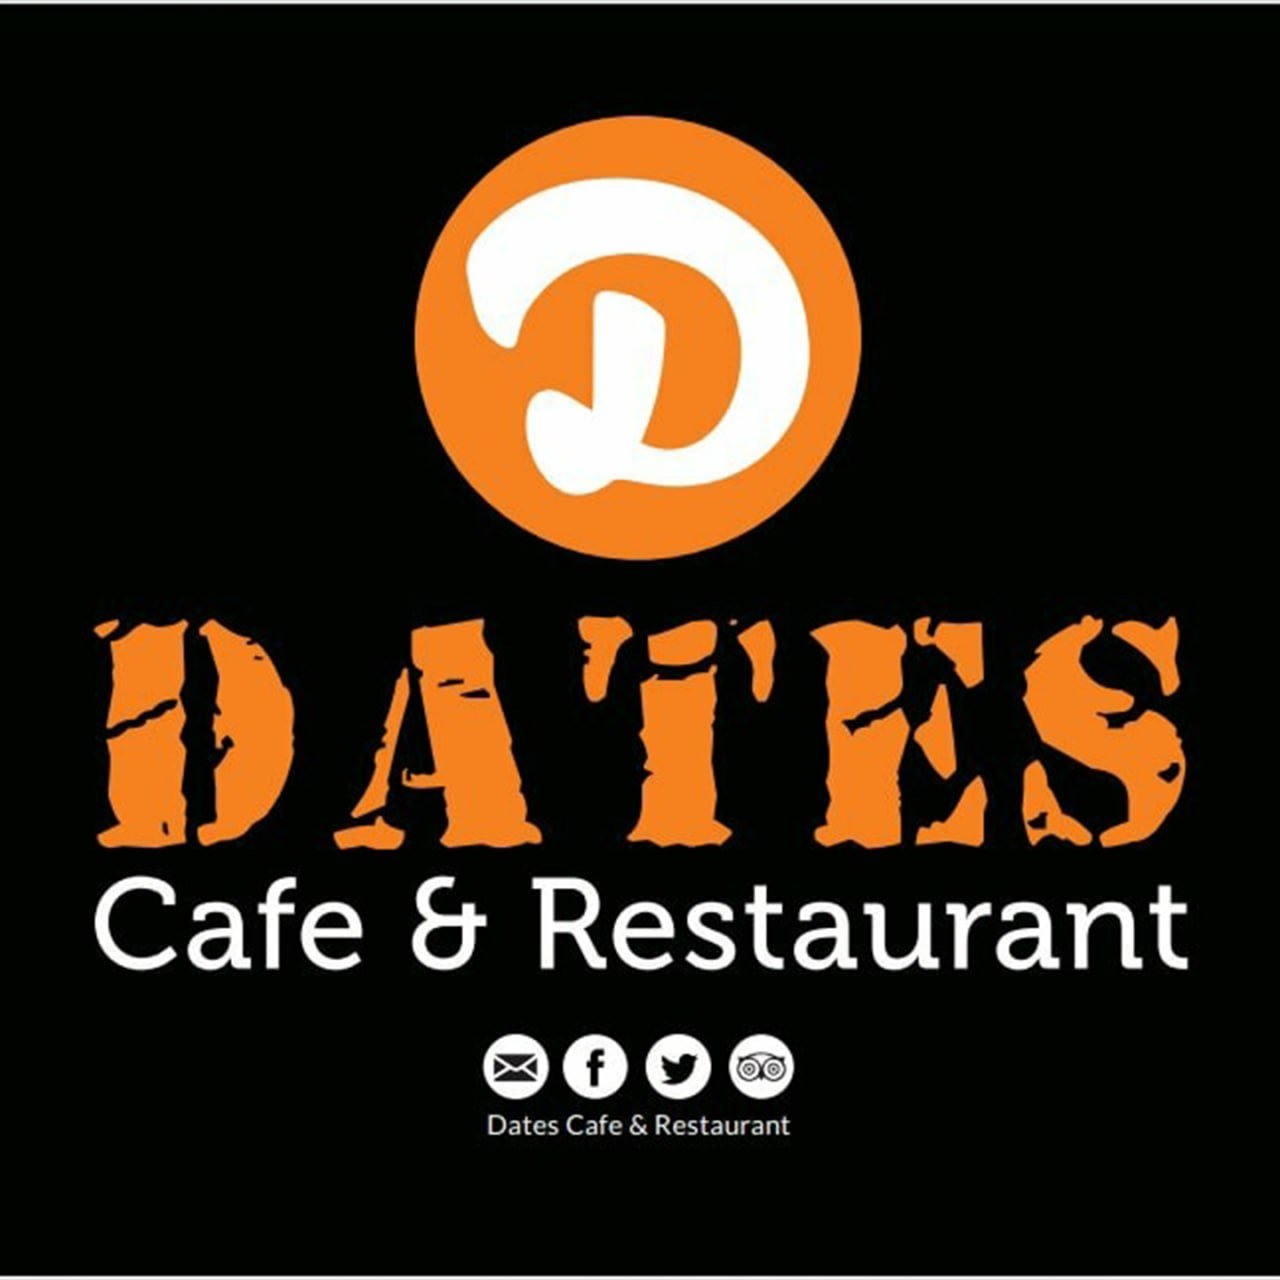 Dates Cafe